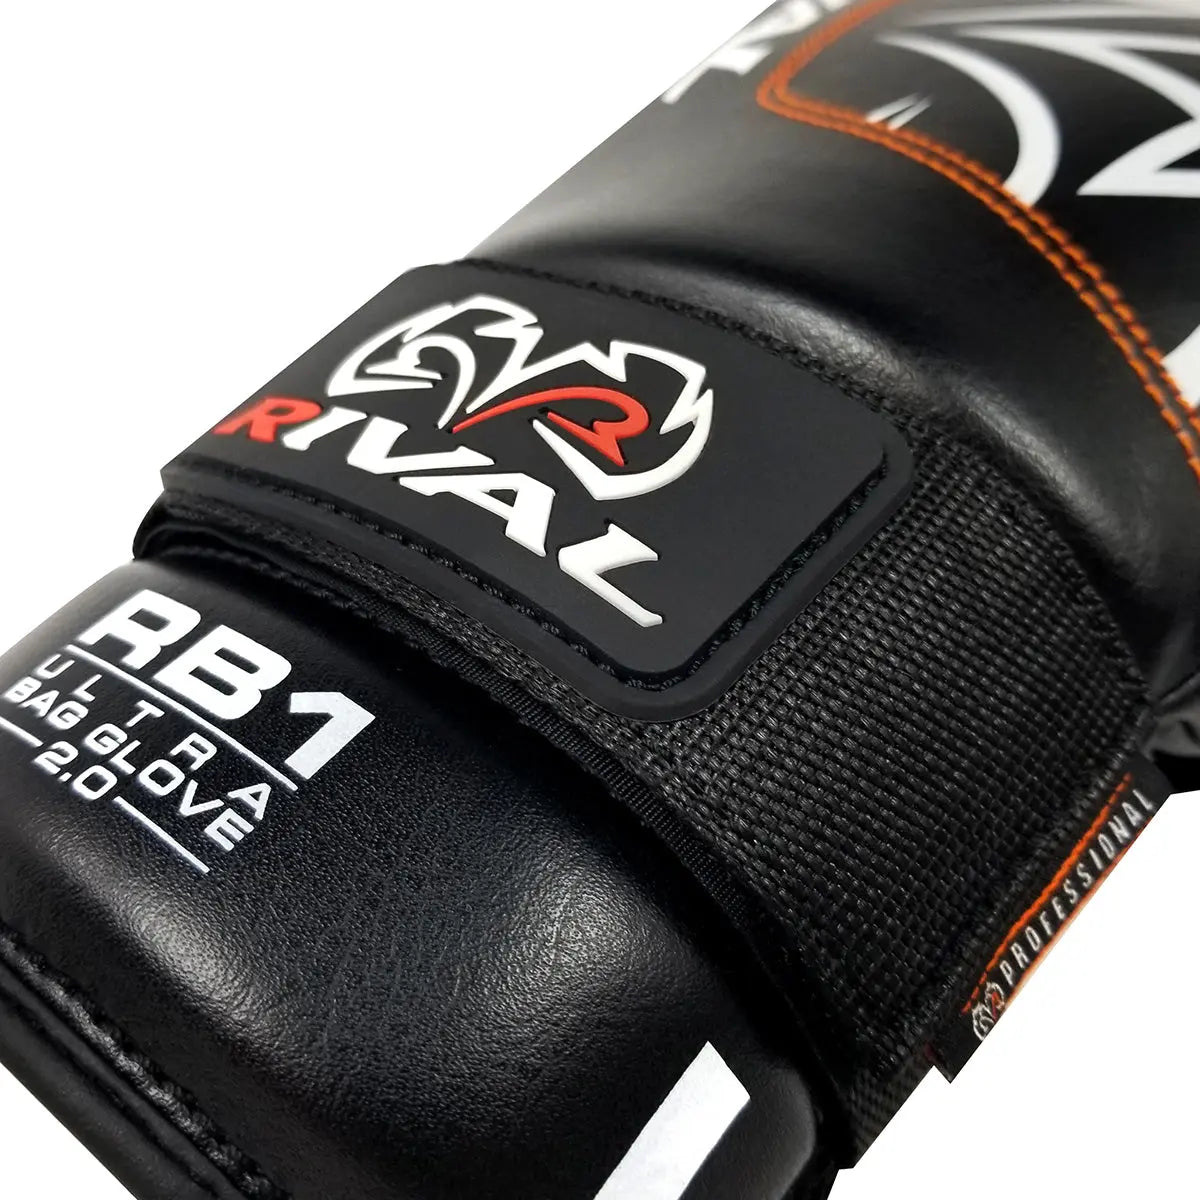 Rival Boxing RB1 Ultra Bag Gloves 2.0 RIVAL